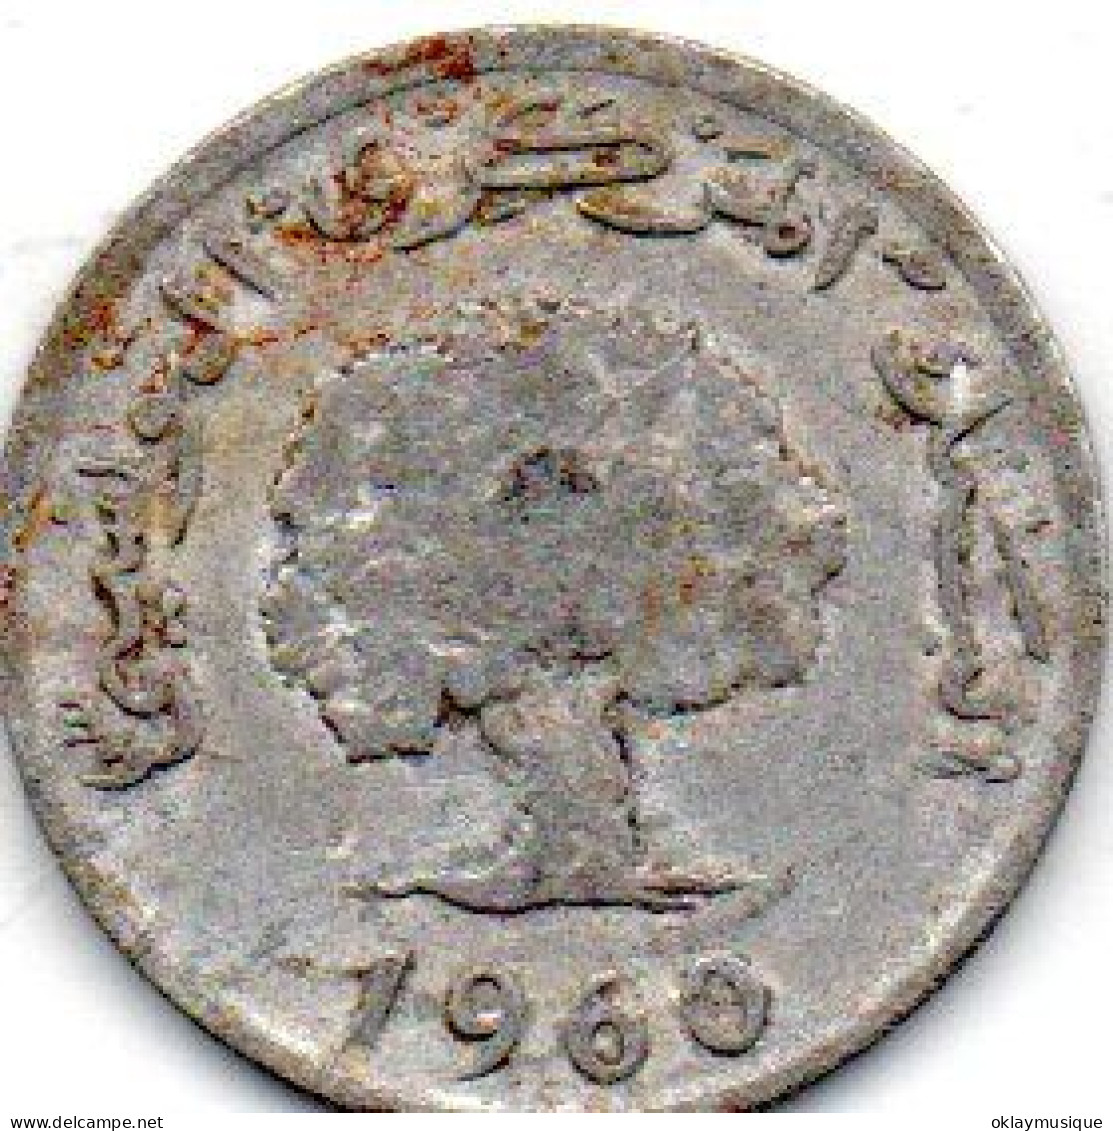 5 Millimes 1960 - Tunisie